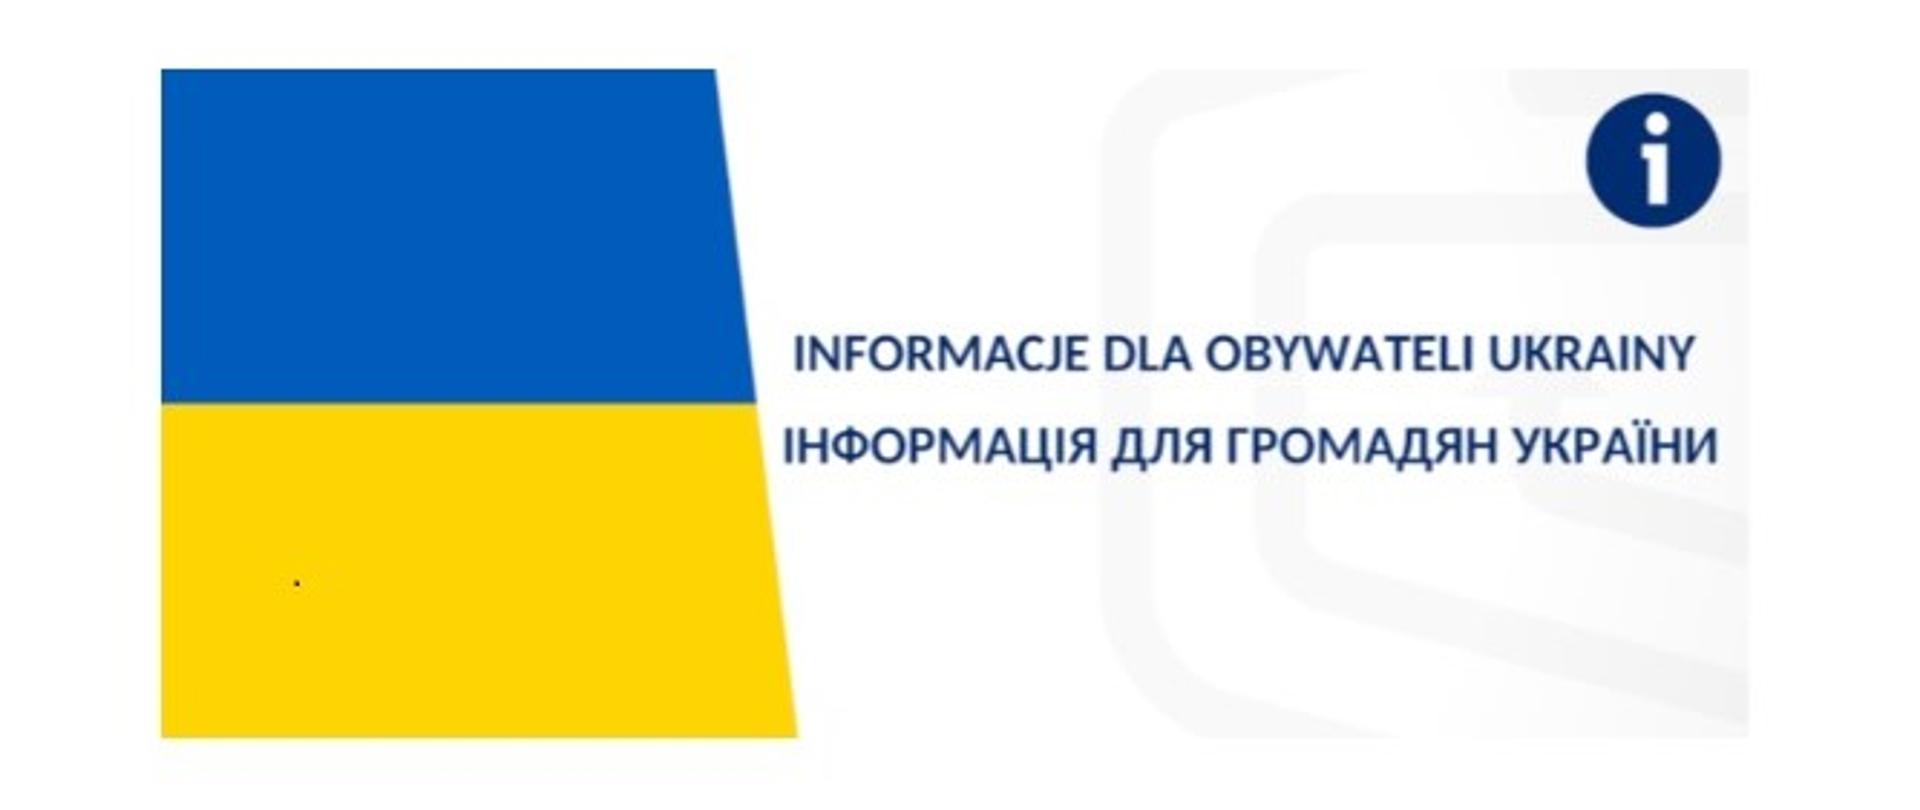 Hażlach: Informacje dla obywateli Ukrainy/ Інформація для громадян України